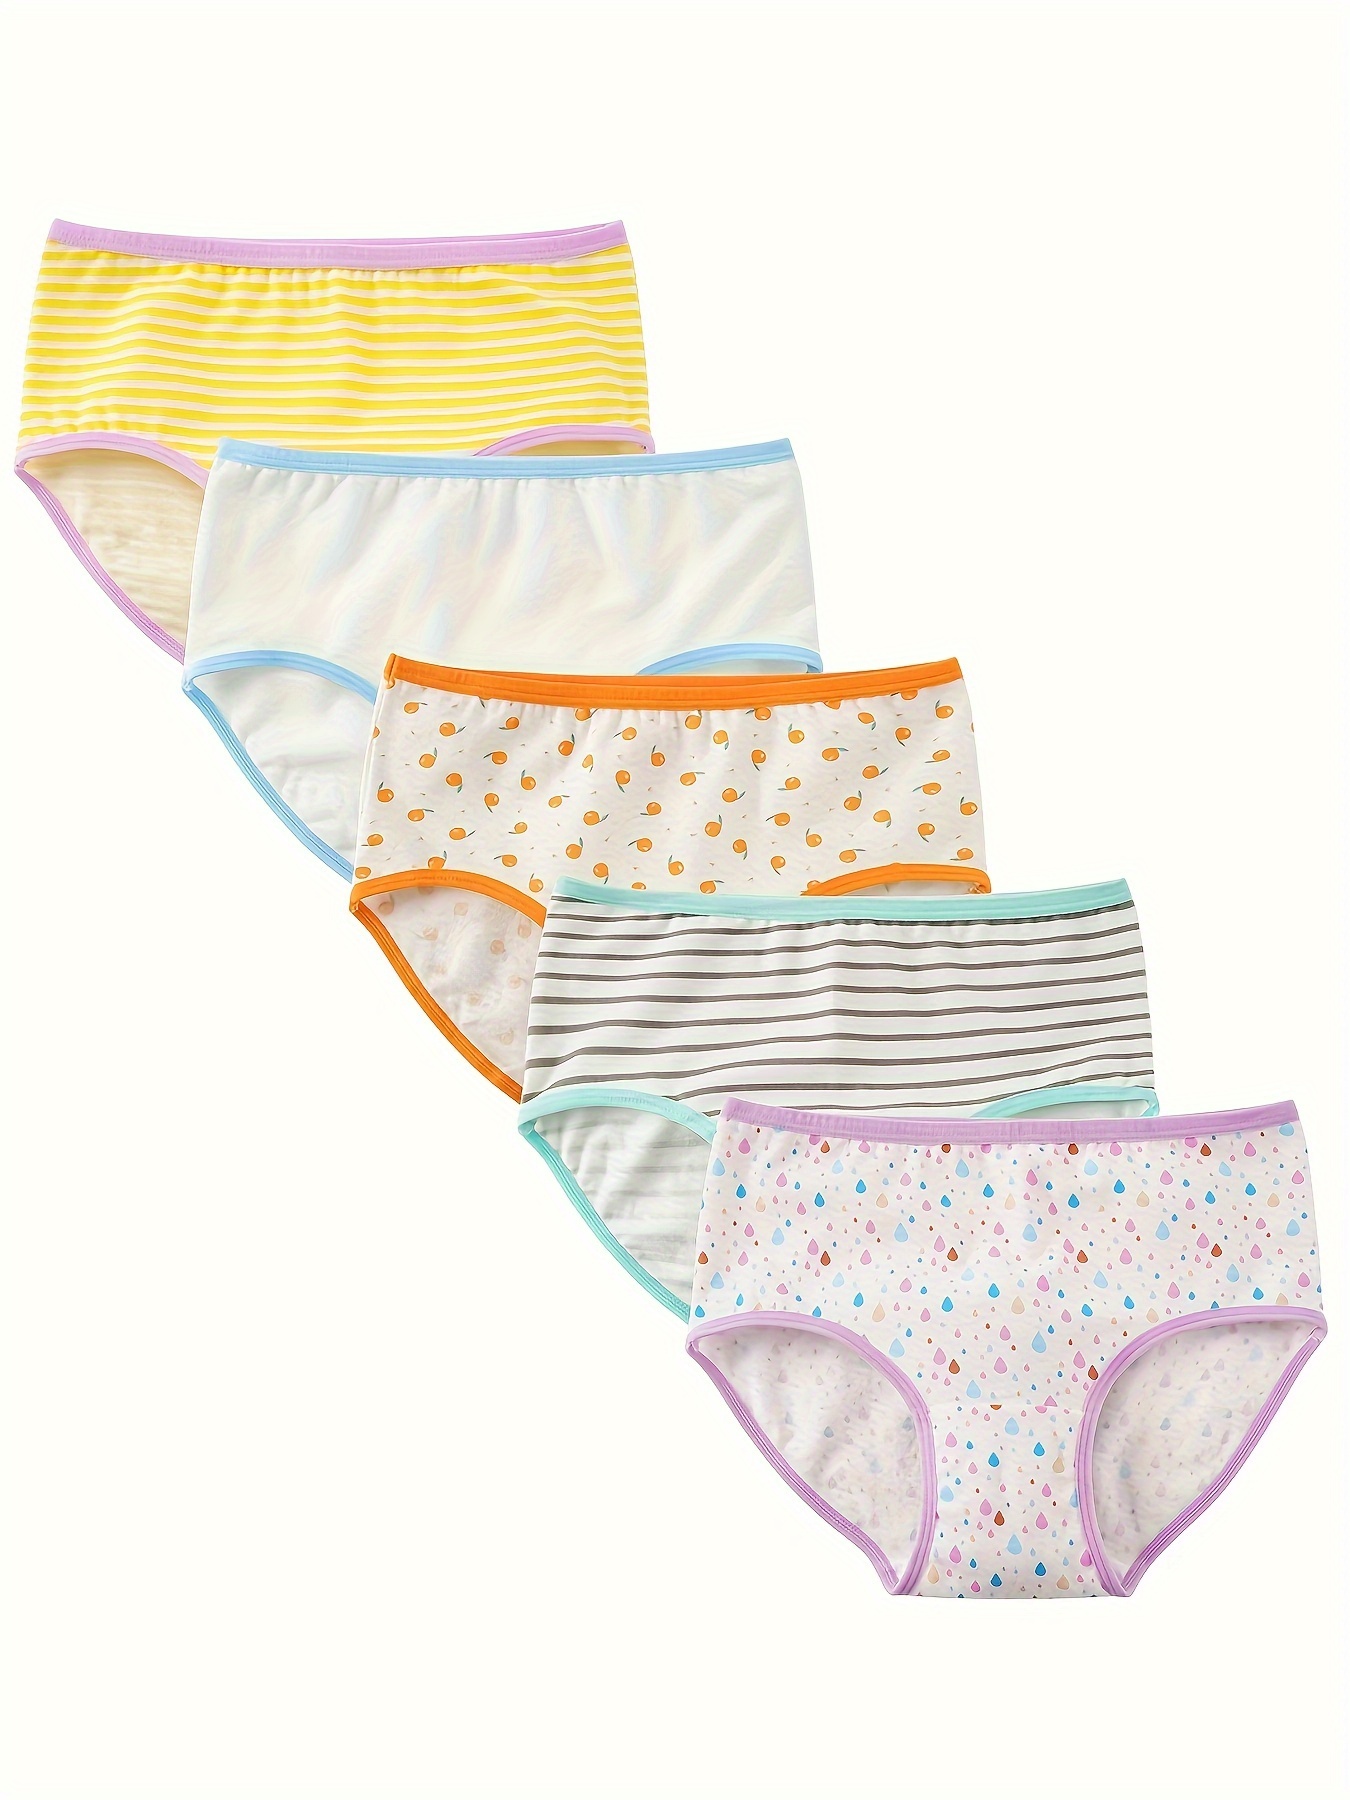  Girls' Underwear - Carter's / Girls' Underwear / Girls'  Clothing: Clothing, Shoes & Jewelry